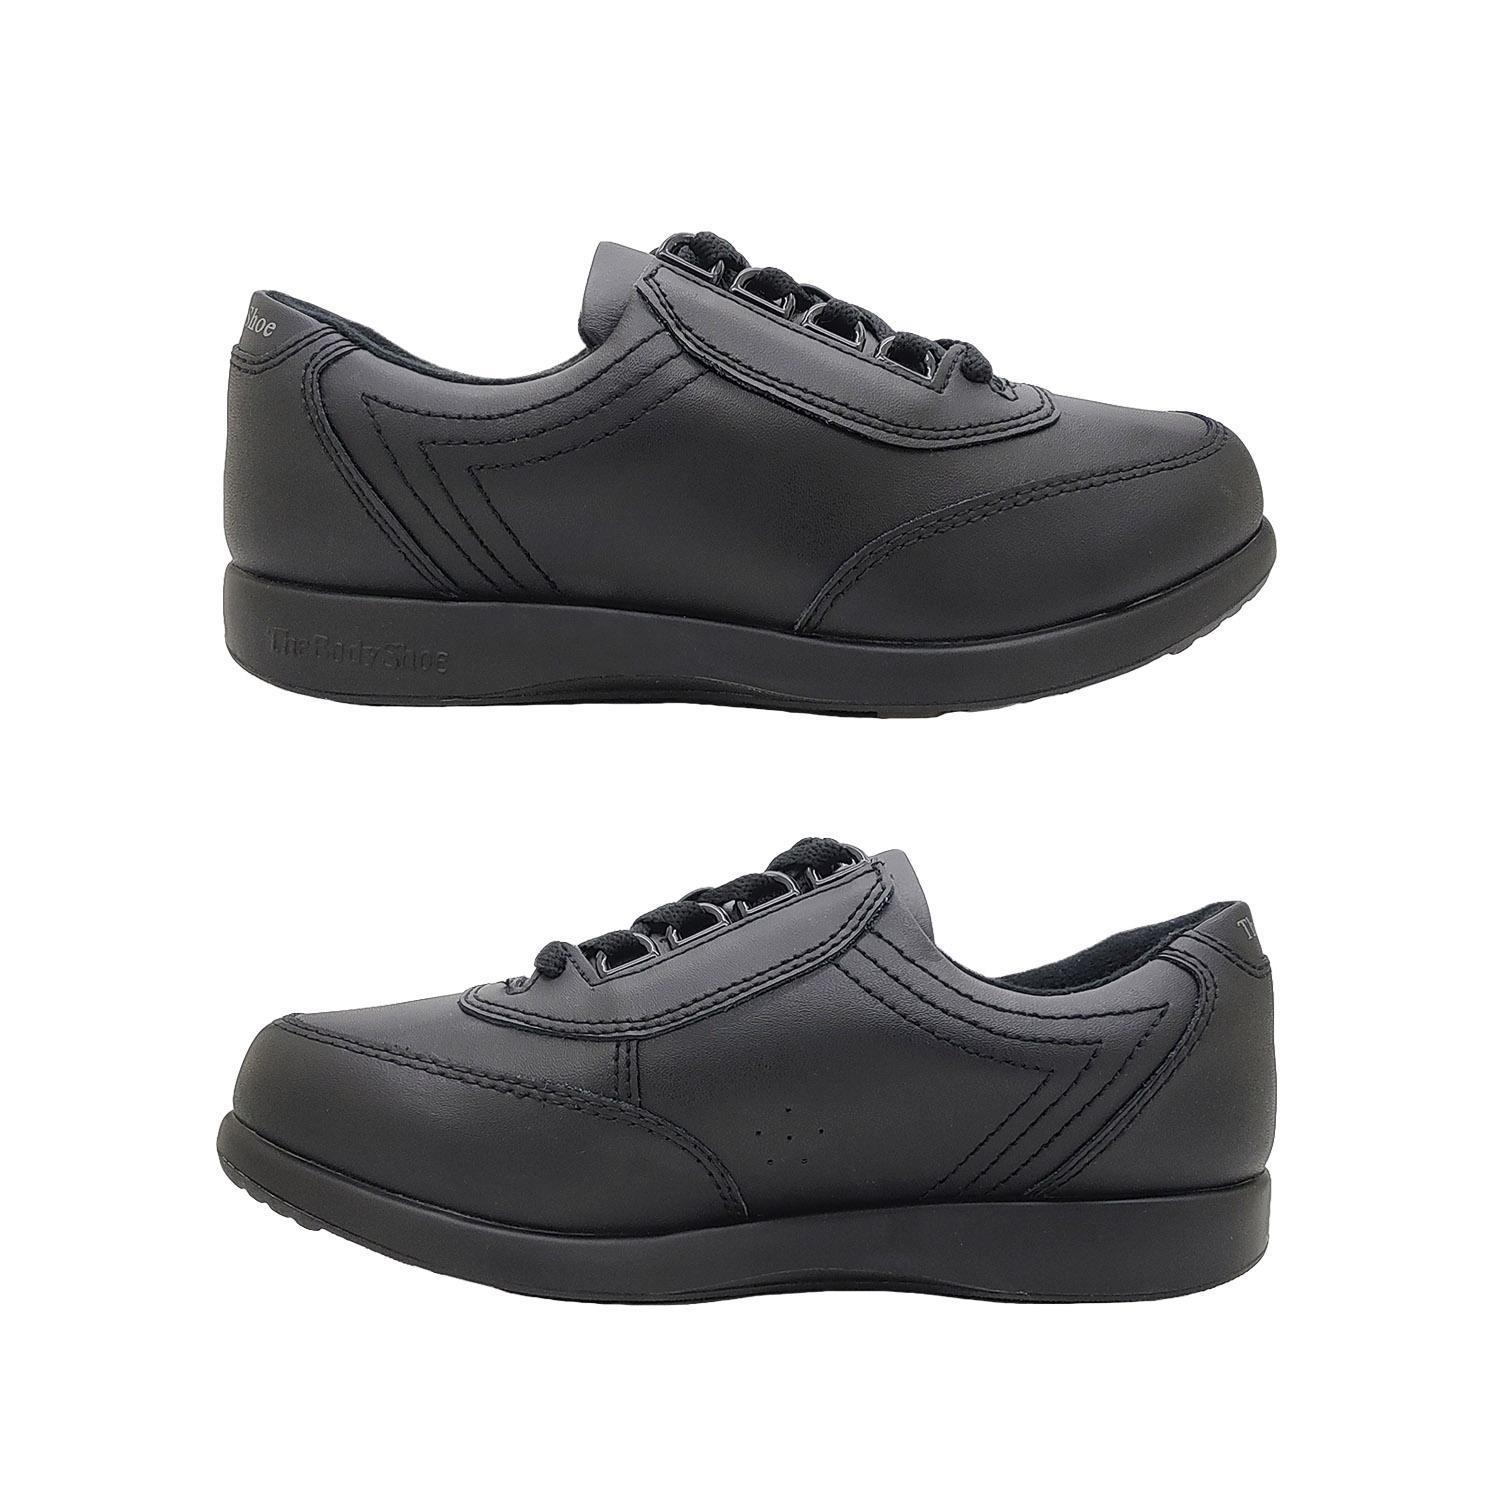 Hush Puppies Classic Walker Ladies Shoes Leather Lace Up Wide Fit Comfort Shoe Black 7